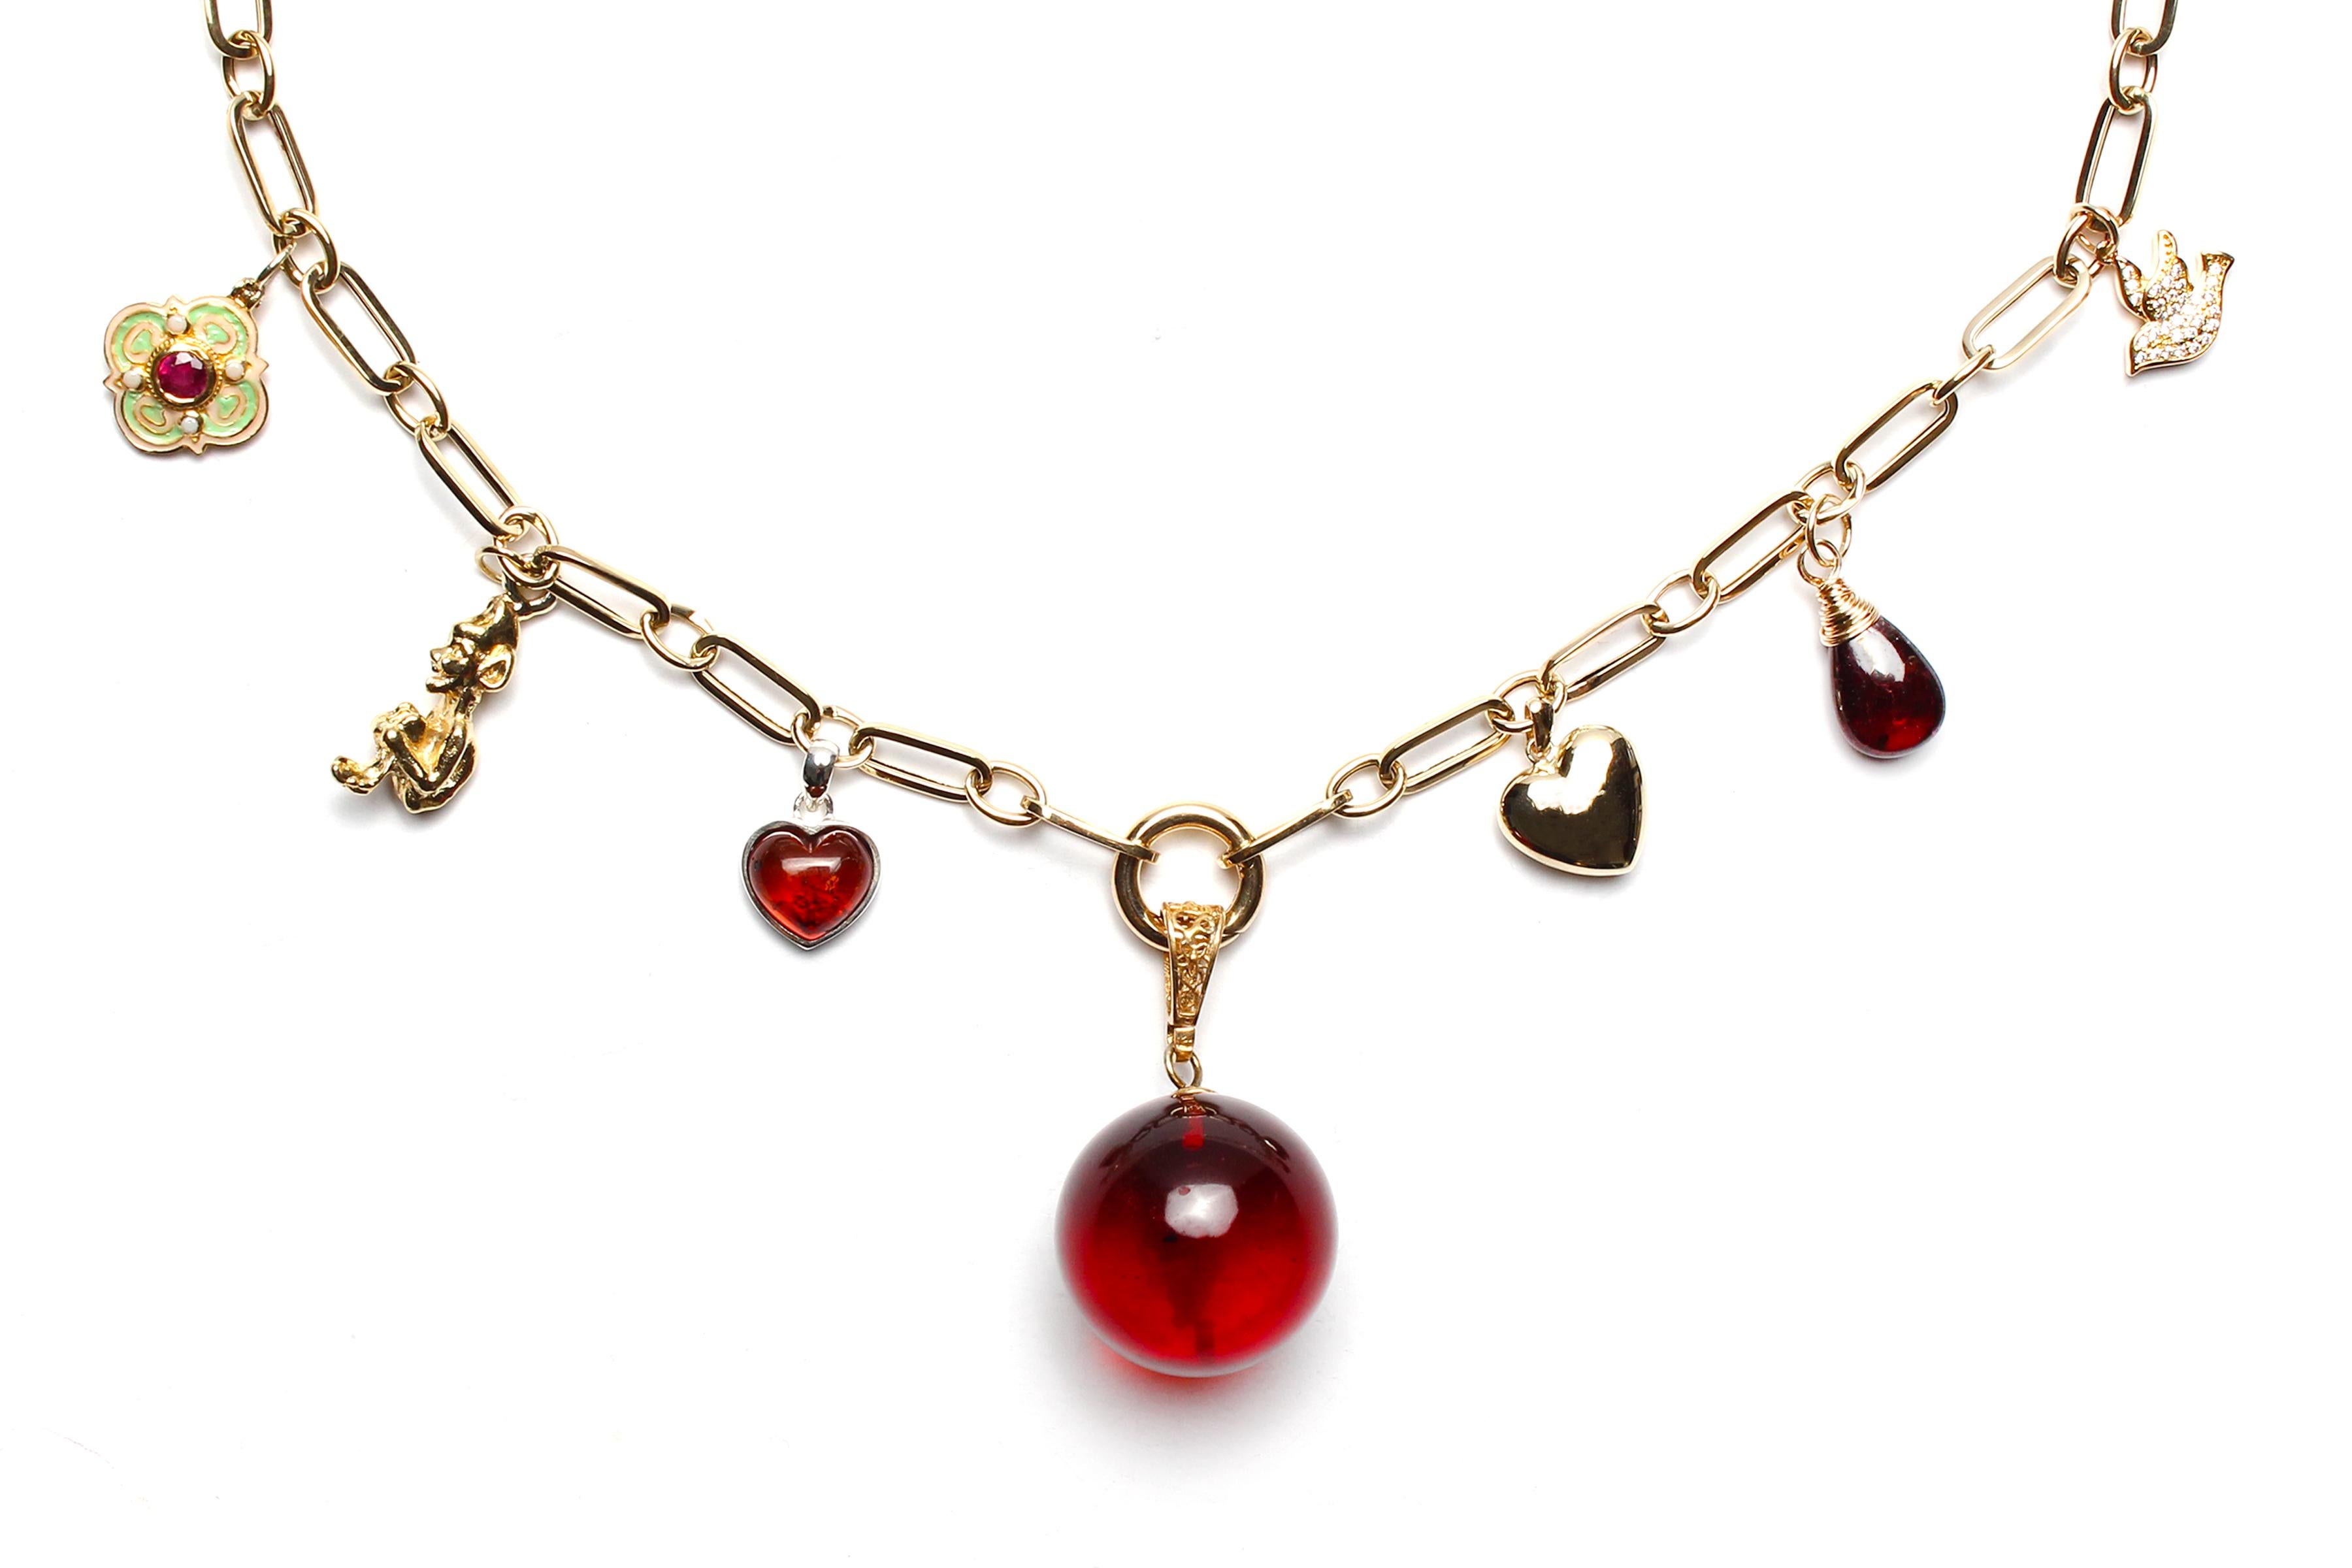 Mixed Cut Clarissa Bronfman 18k 14k Gold Diamond Garnet Amber Charm Paperclip Necklace For Sale